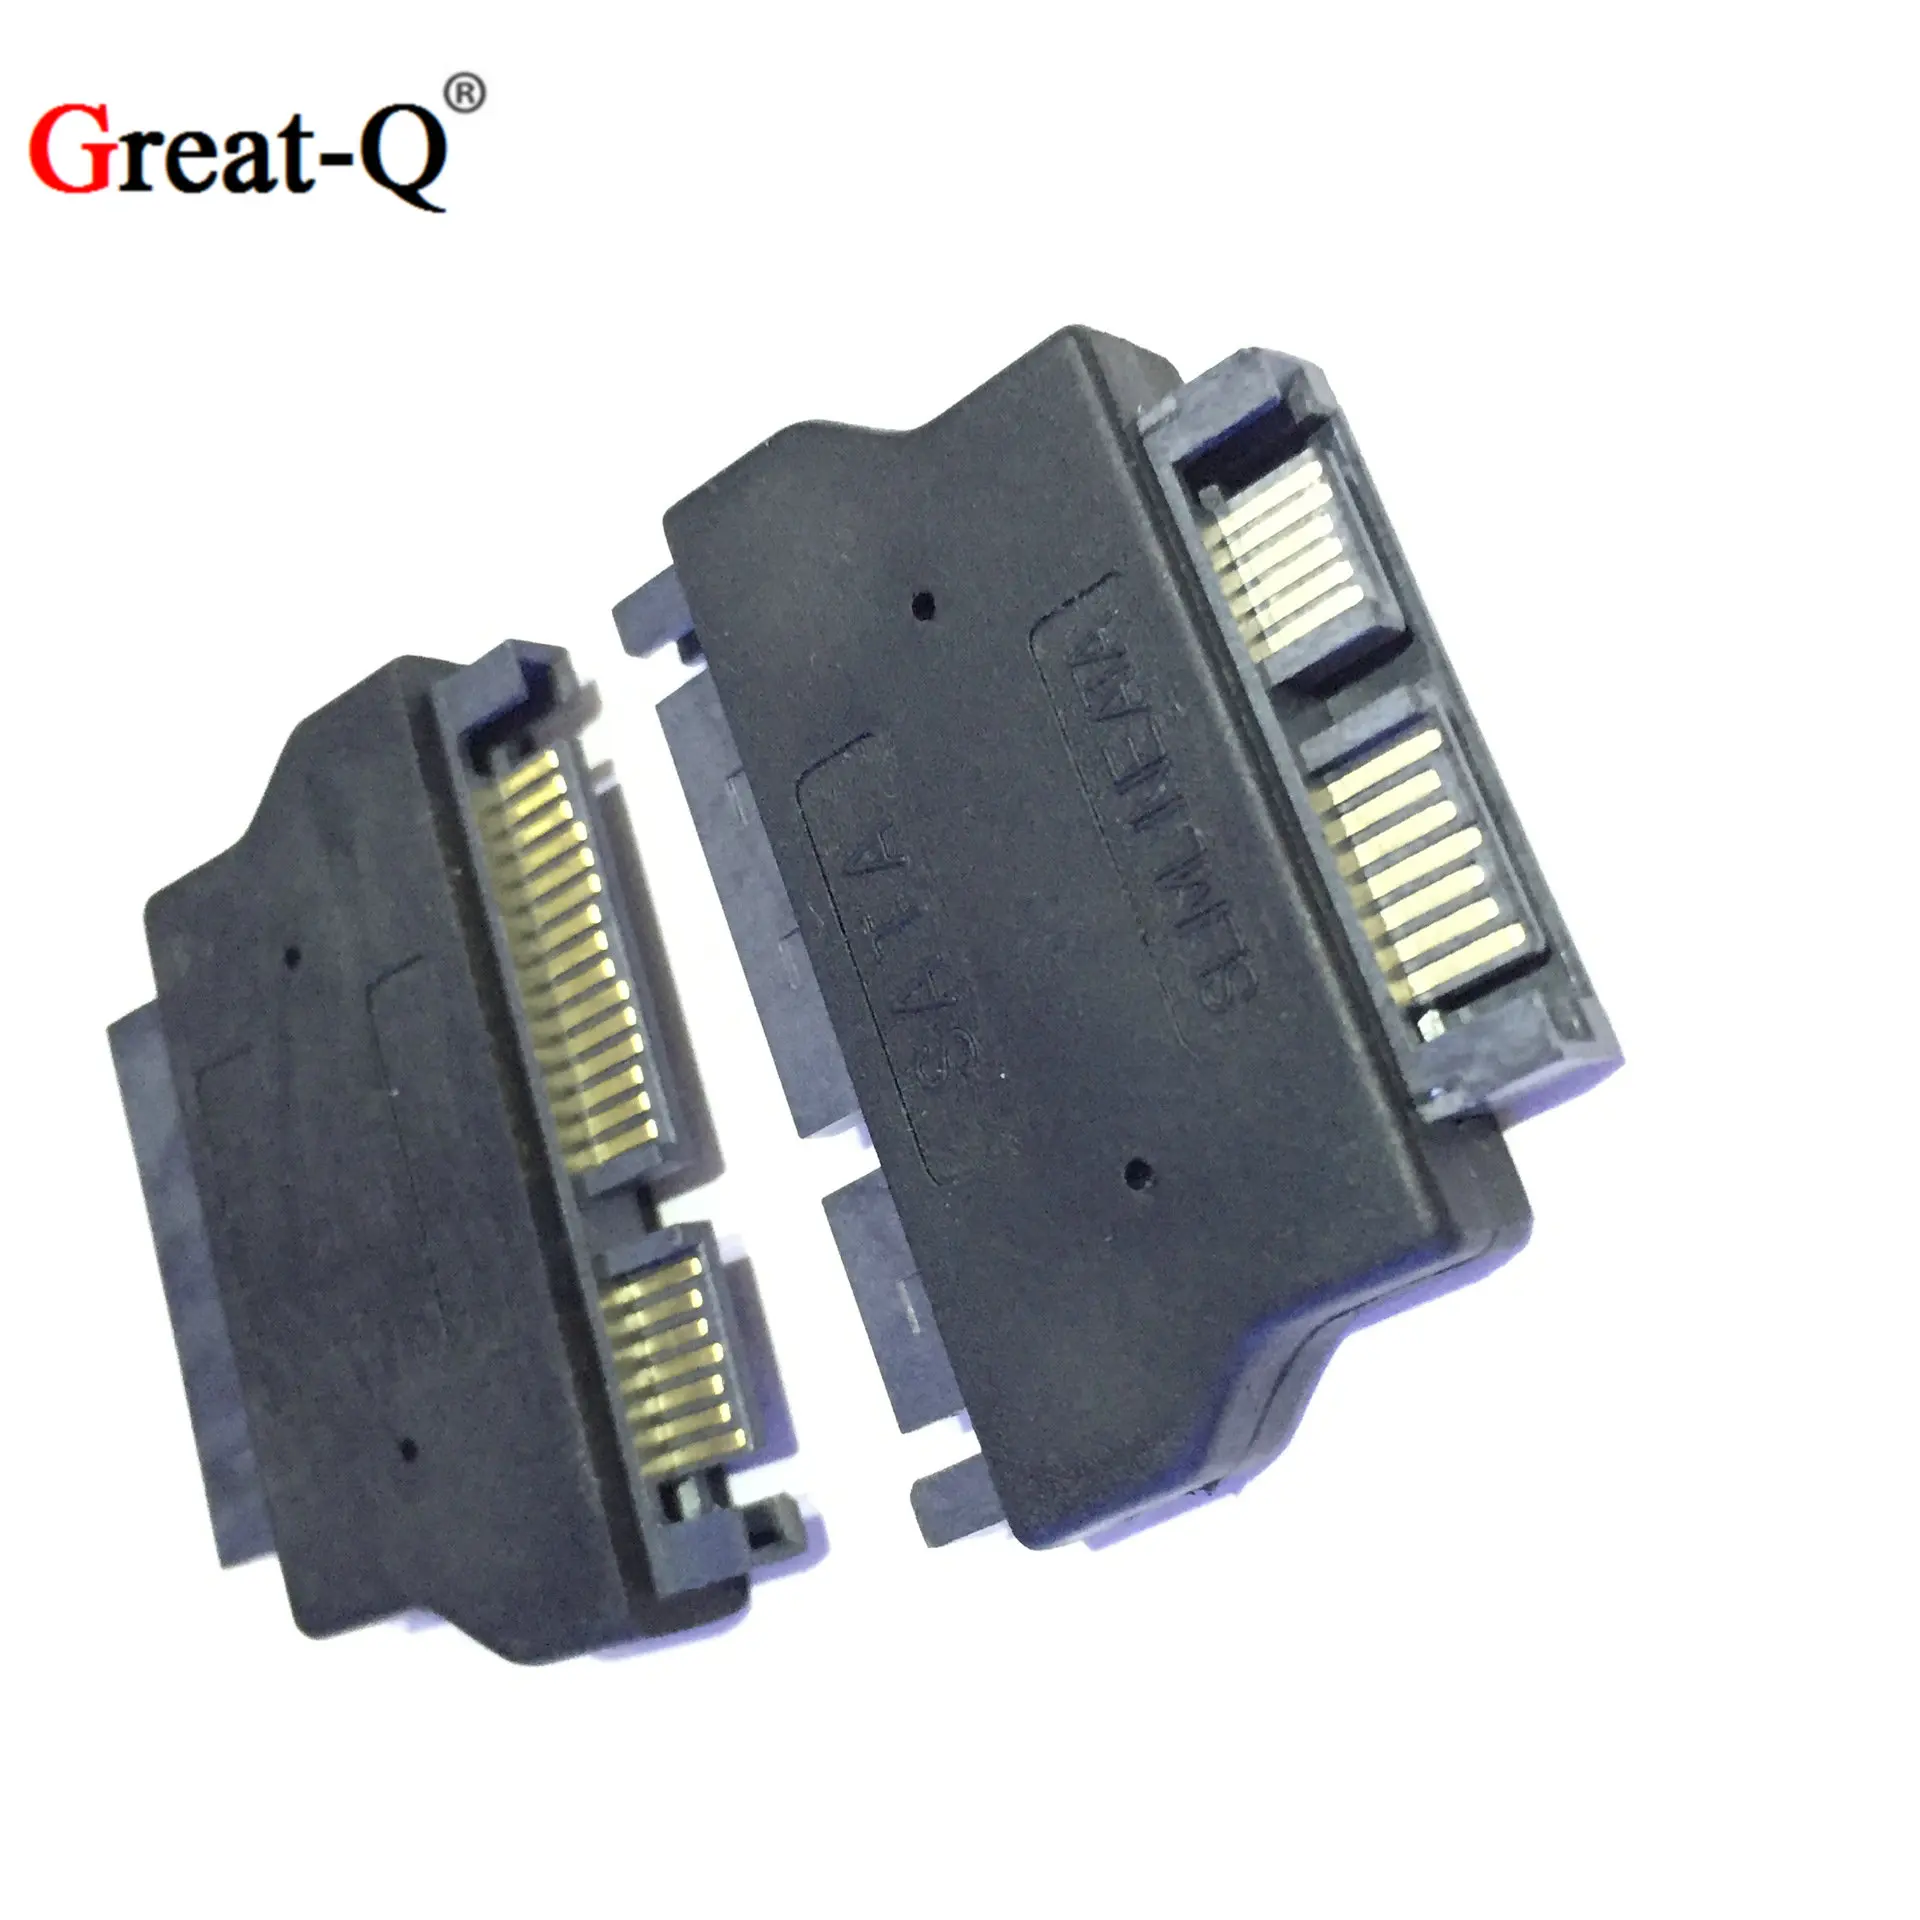 

SATA 22 pin 22p Male to ODD slimline SATA 13 pin male CD-ROM convertor adapter